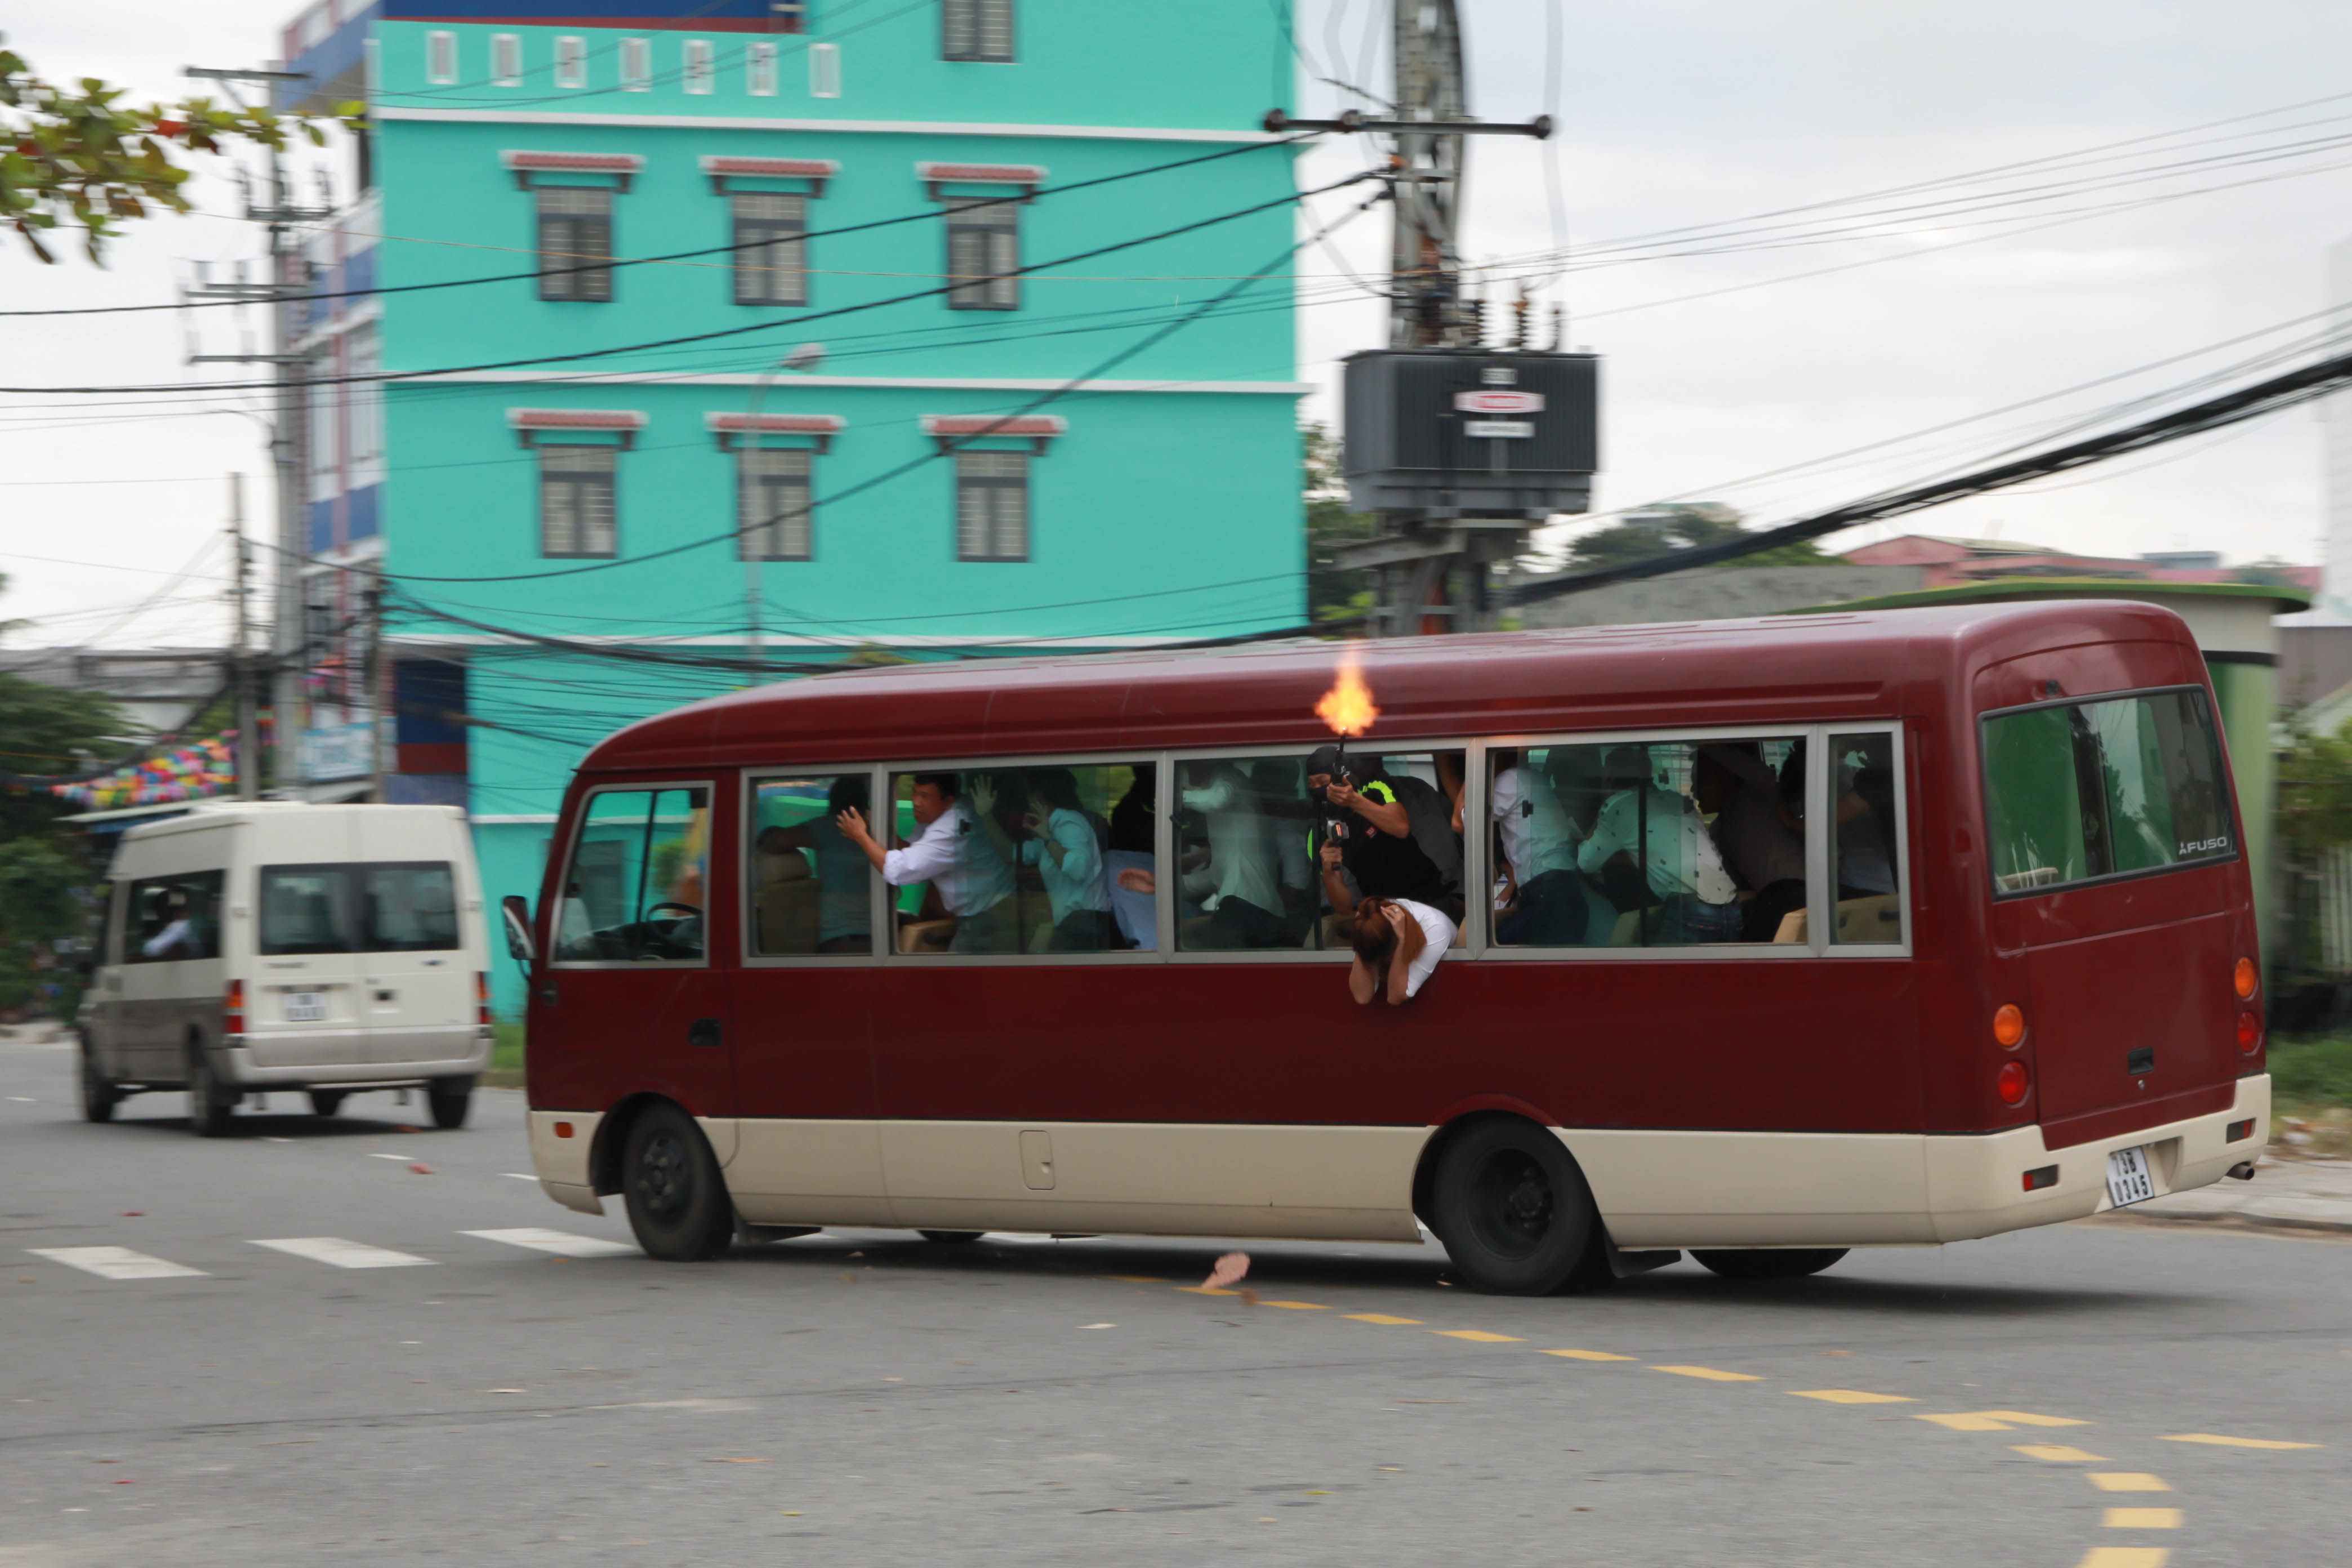 A group of terrorists hijack a bus in an anti-terror drill scenario.